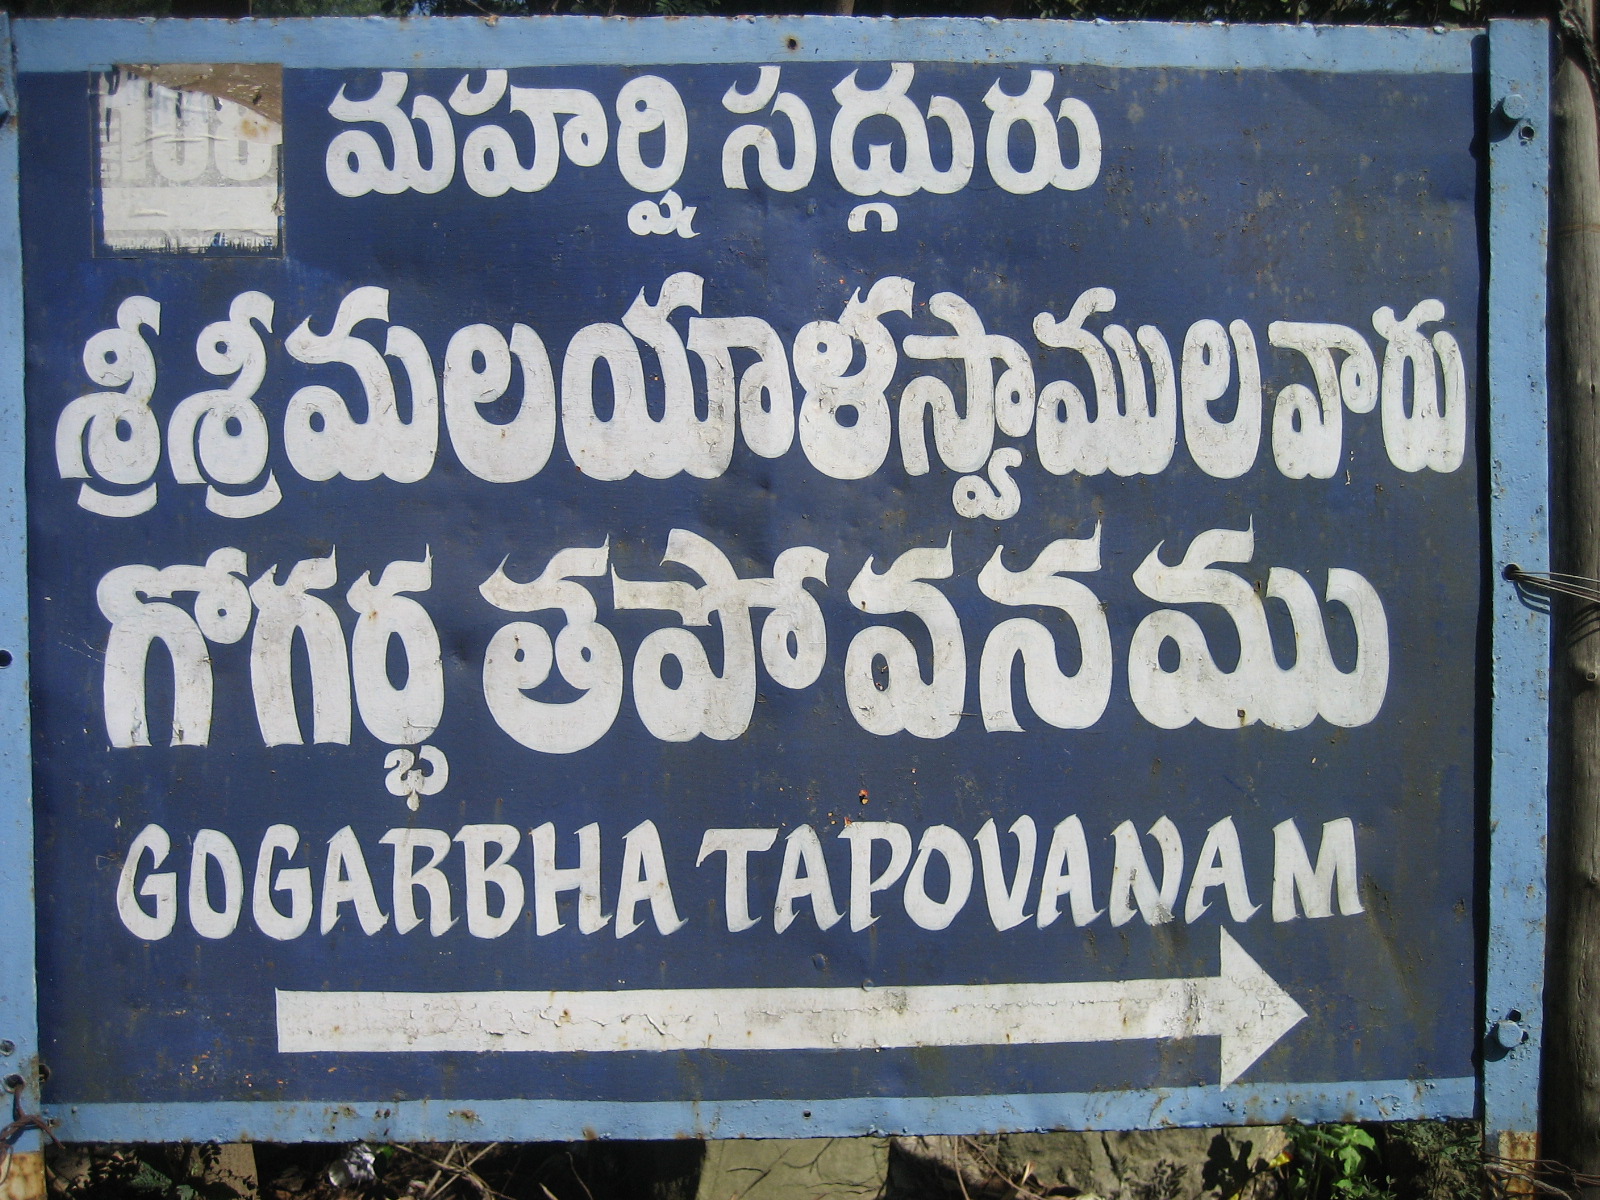 Gogarbha Tapovanam